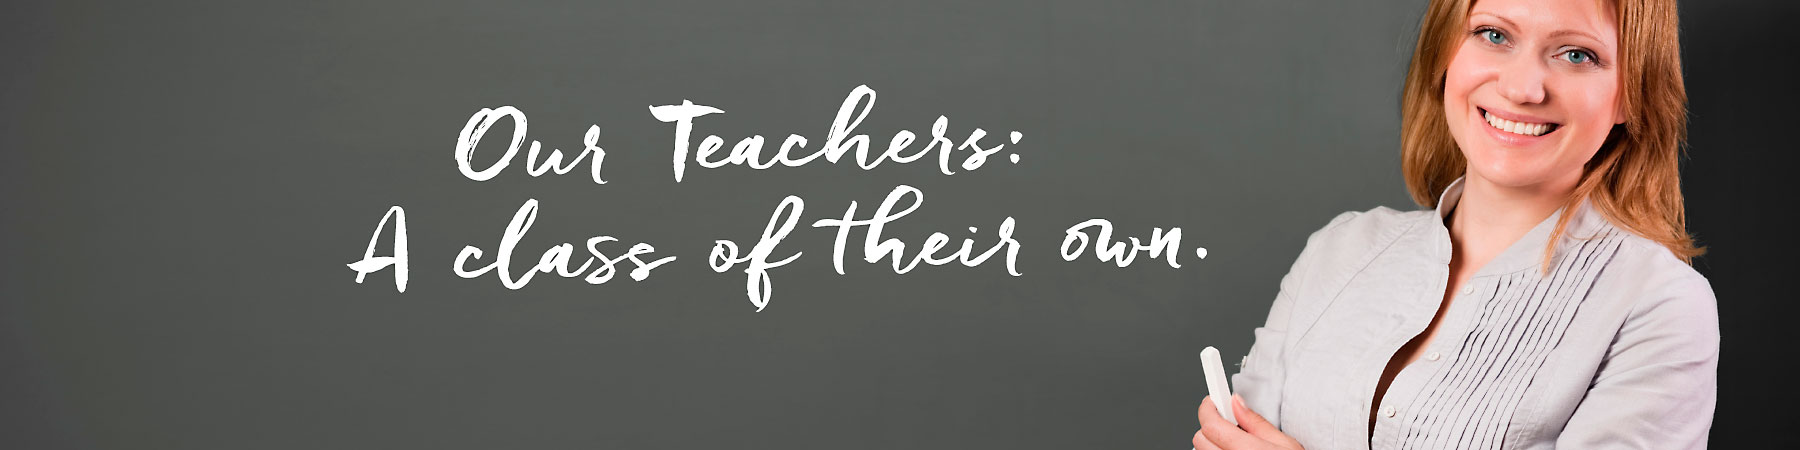 our teachers a class of their own.